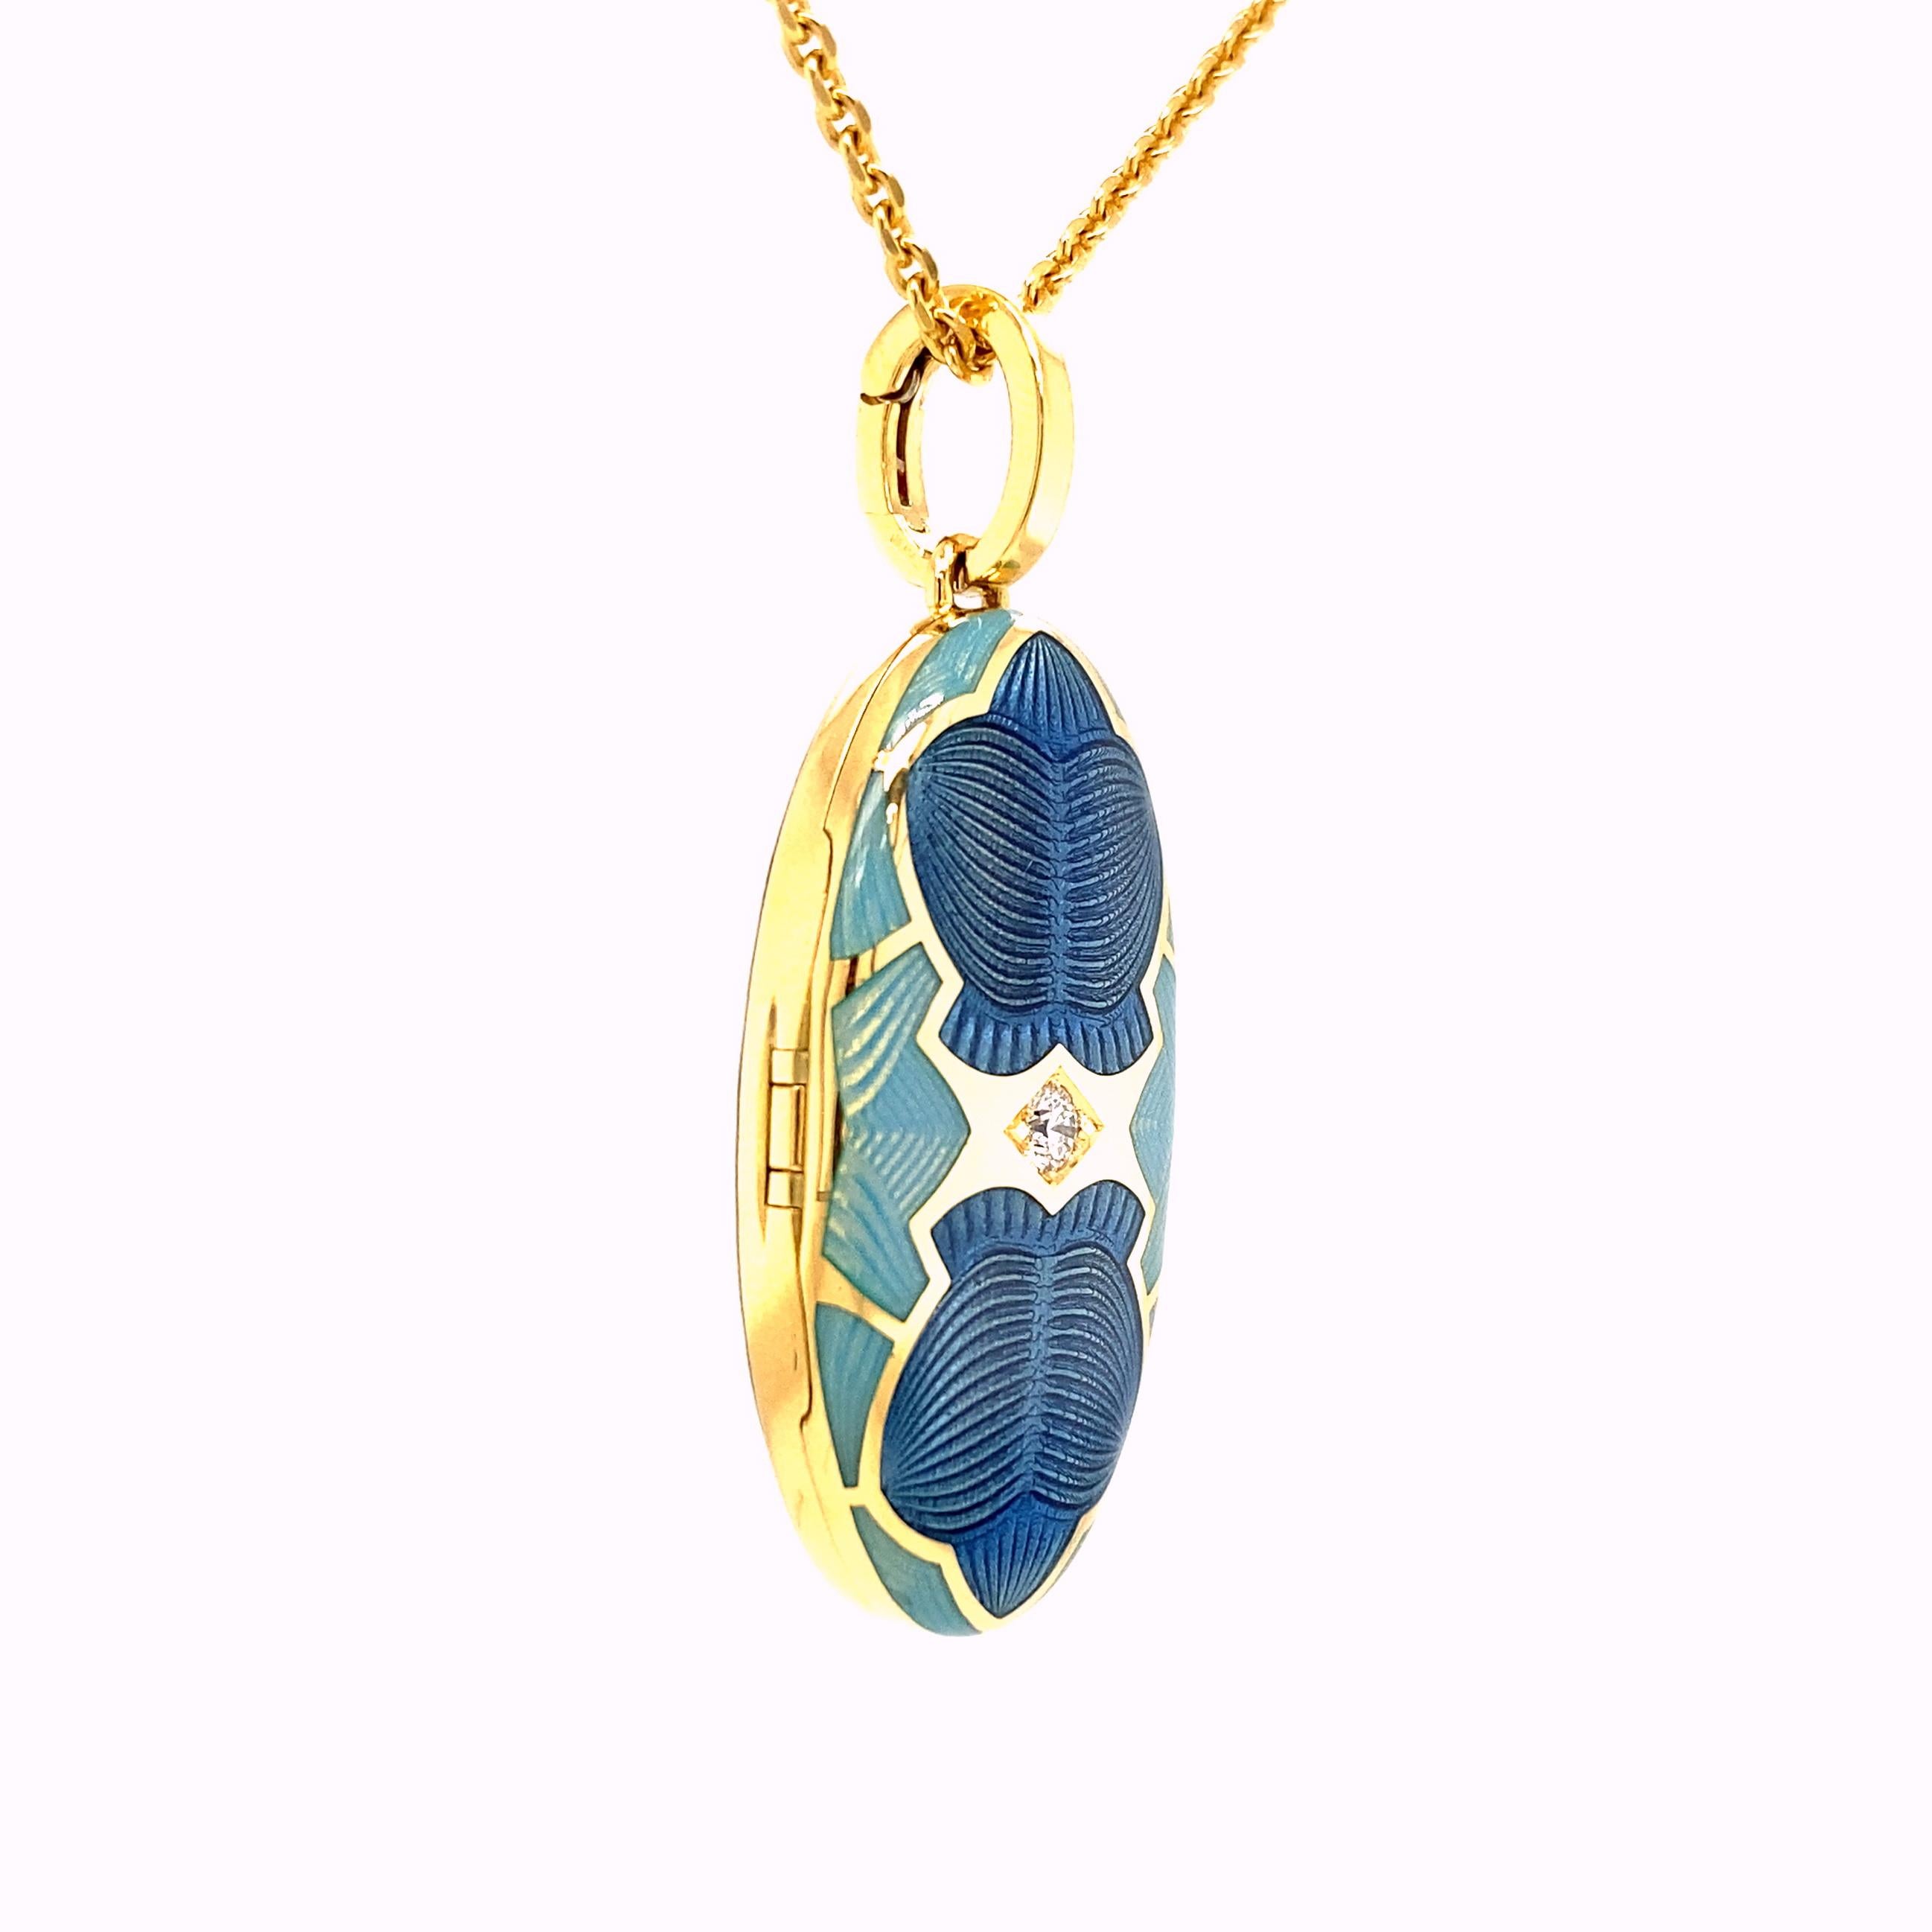 Oval Locket Pendant Necklace 18k Yellow Gold Blue/Turqouise Enamel Diamond 0.1ct For Sale 1